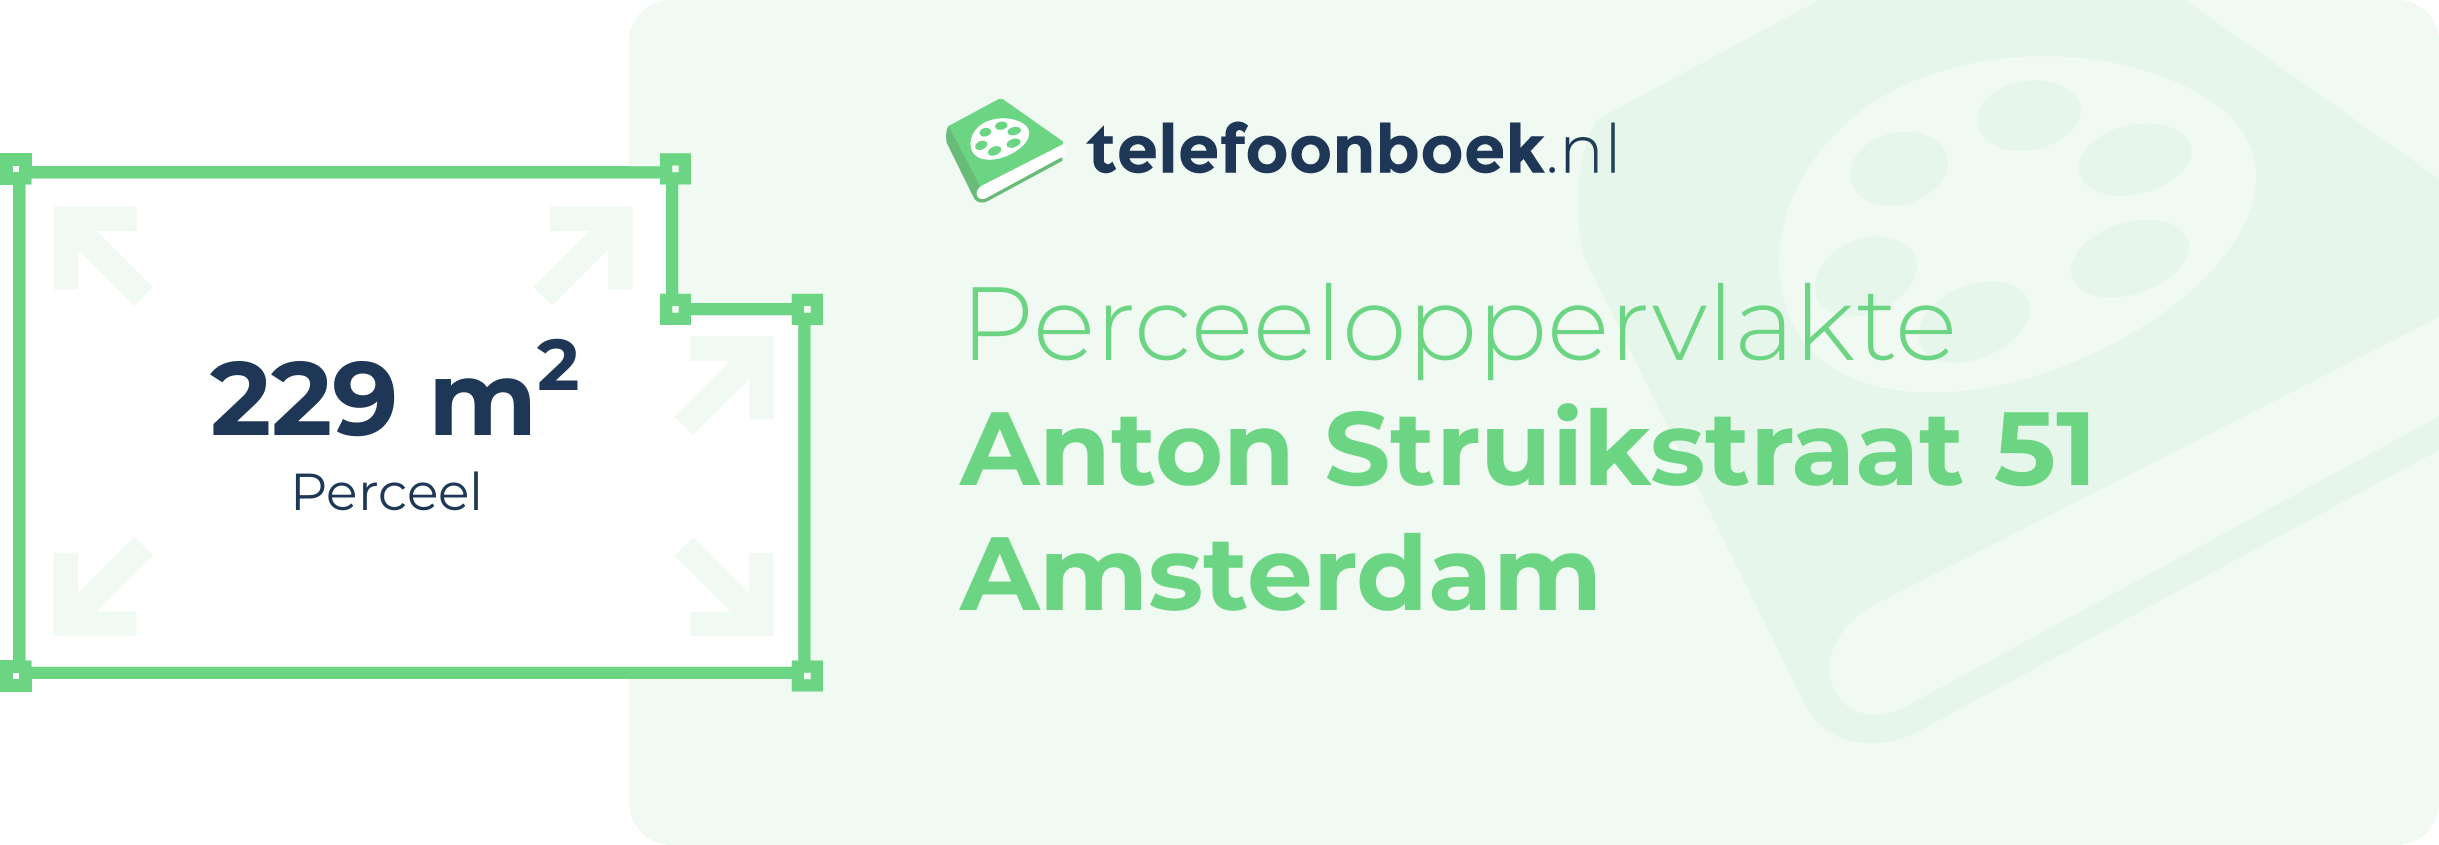 Perceeloppervlakte Anton Struikstraat 51 Amsterdam